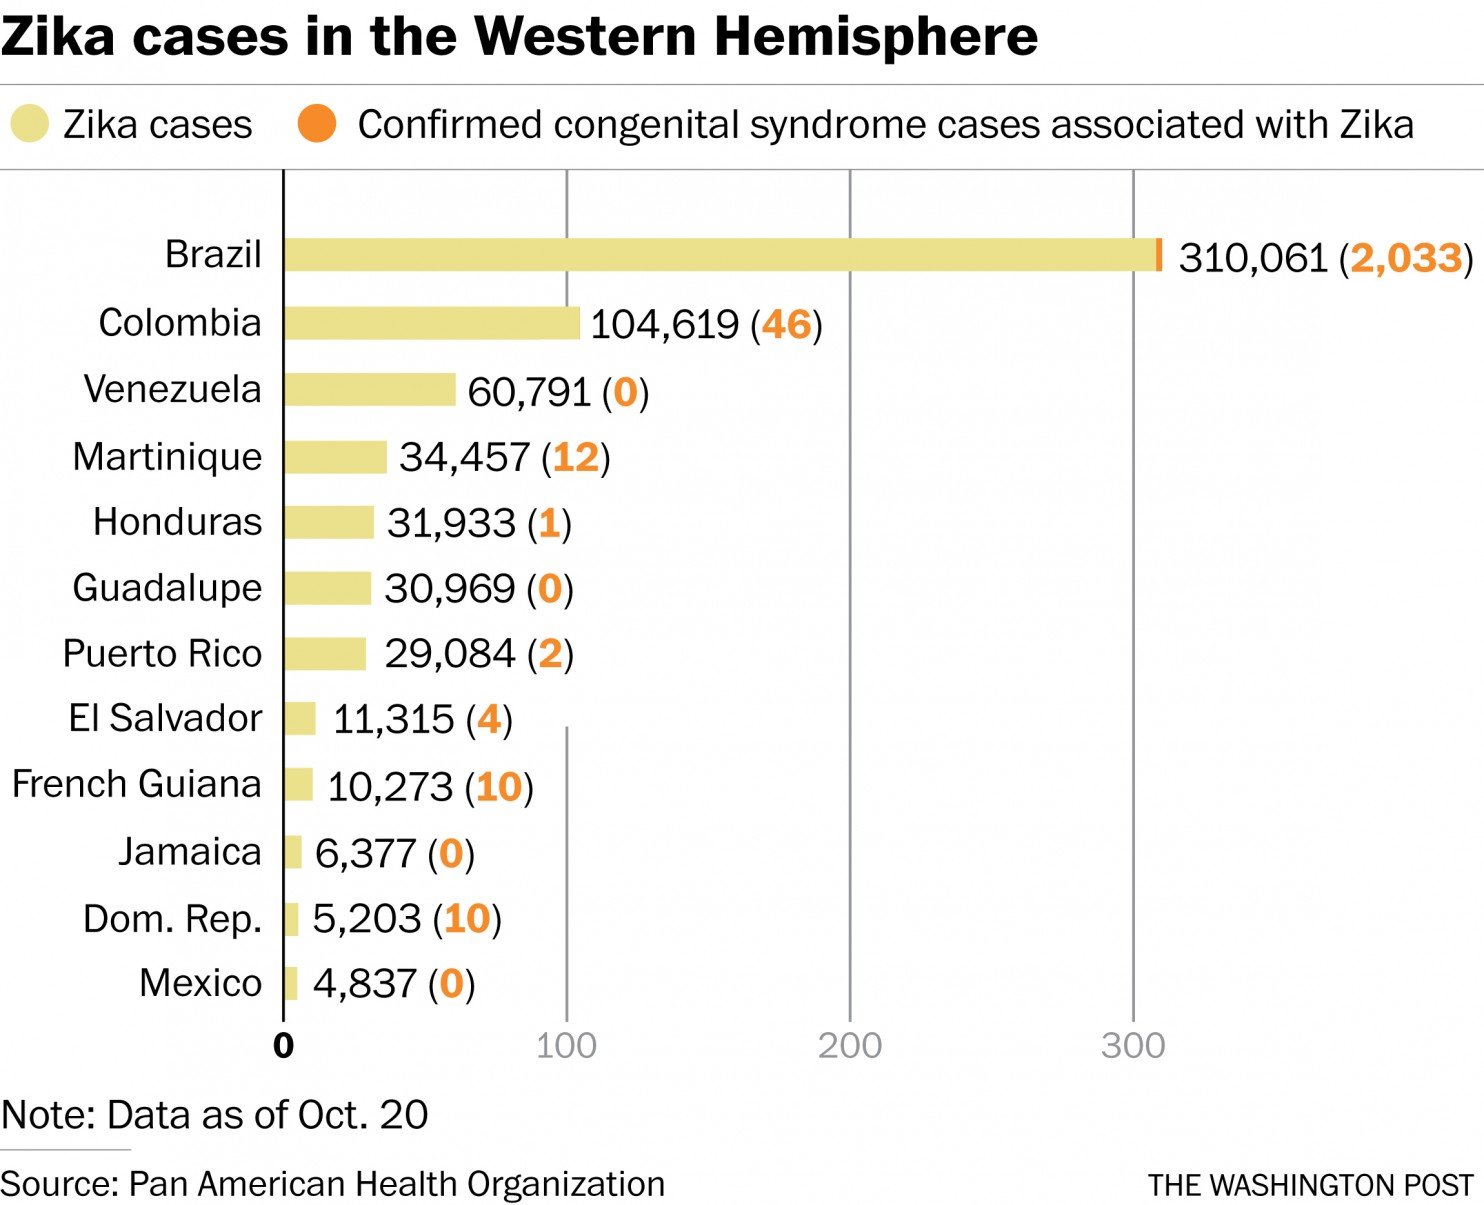 Zika cases in western hemisphere chart